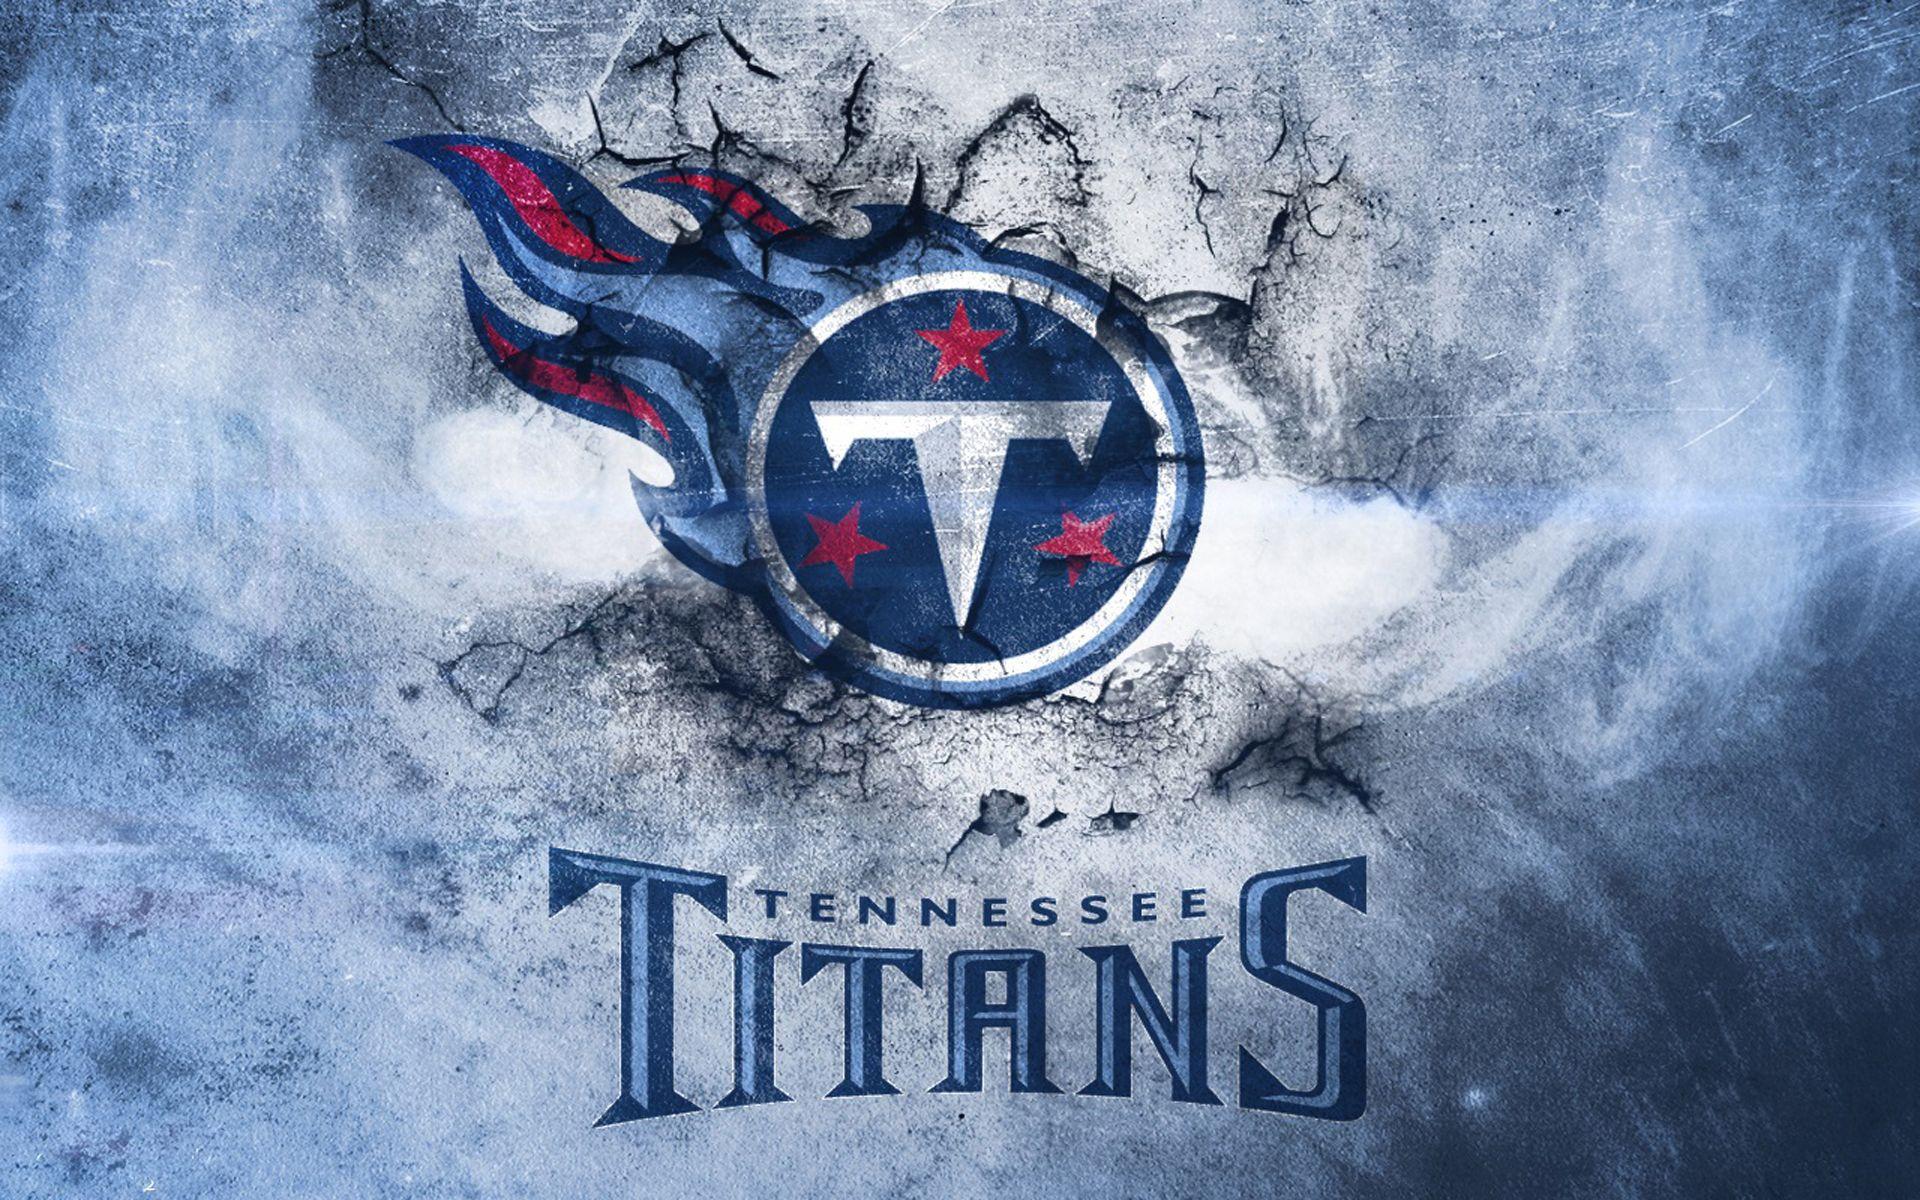 NFL Titans Logo - Tennessee Titans logo wallpaper hd wallpapers NFL Cool Wallpapers HD ...